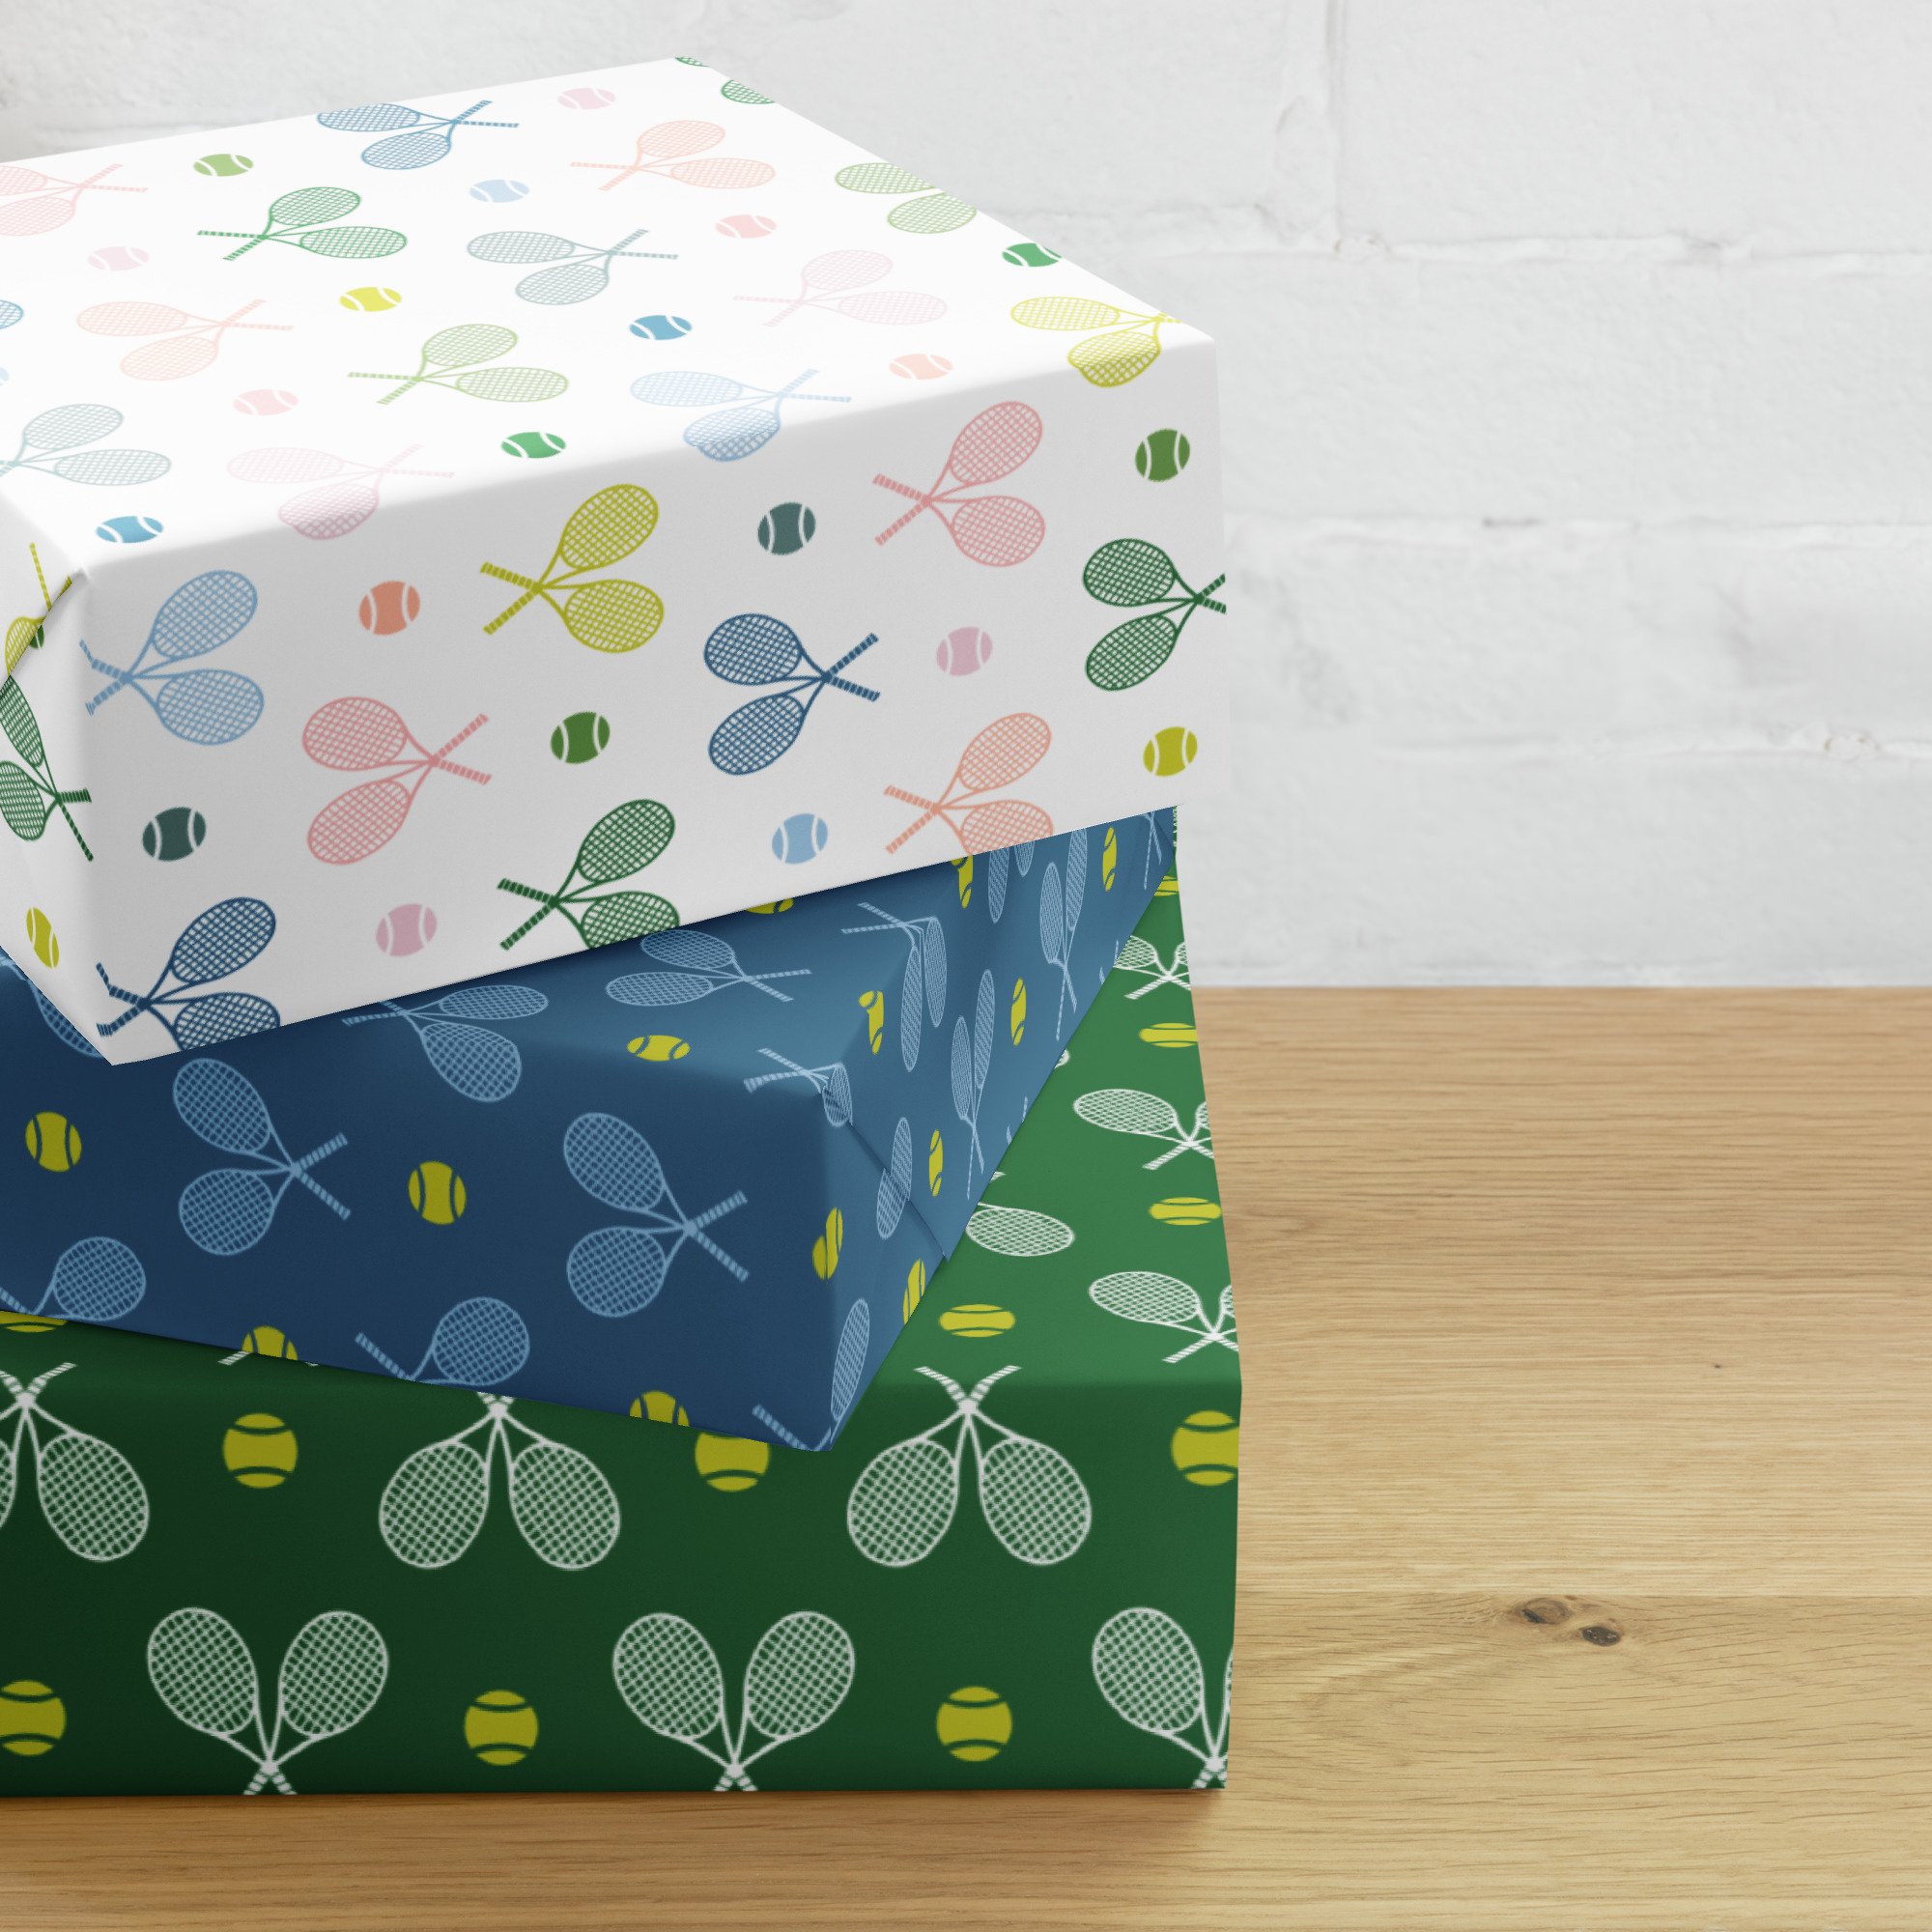 Tennis Wrapping Paper Sheets (Set of 3) — Lemon Life Design